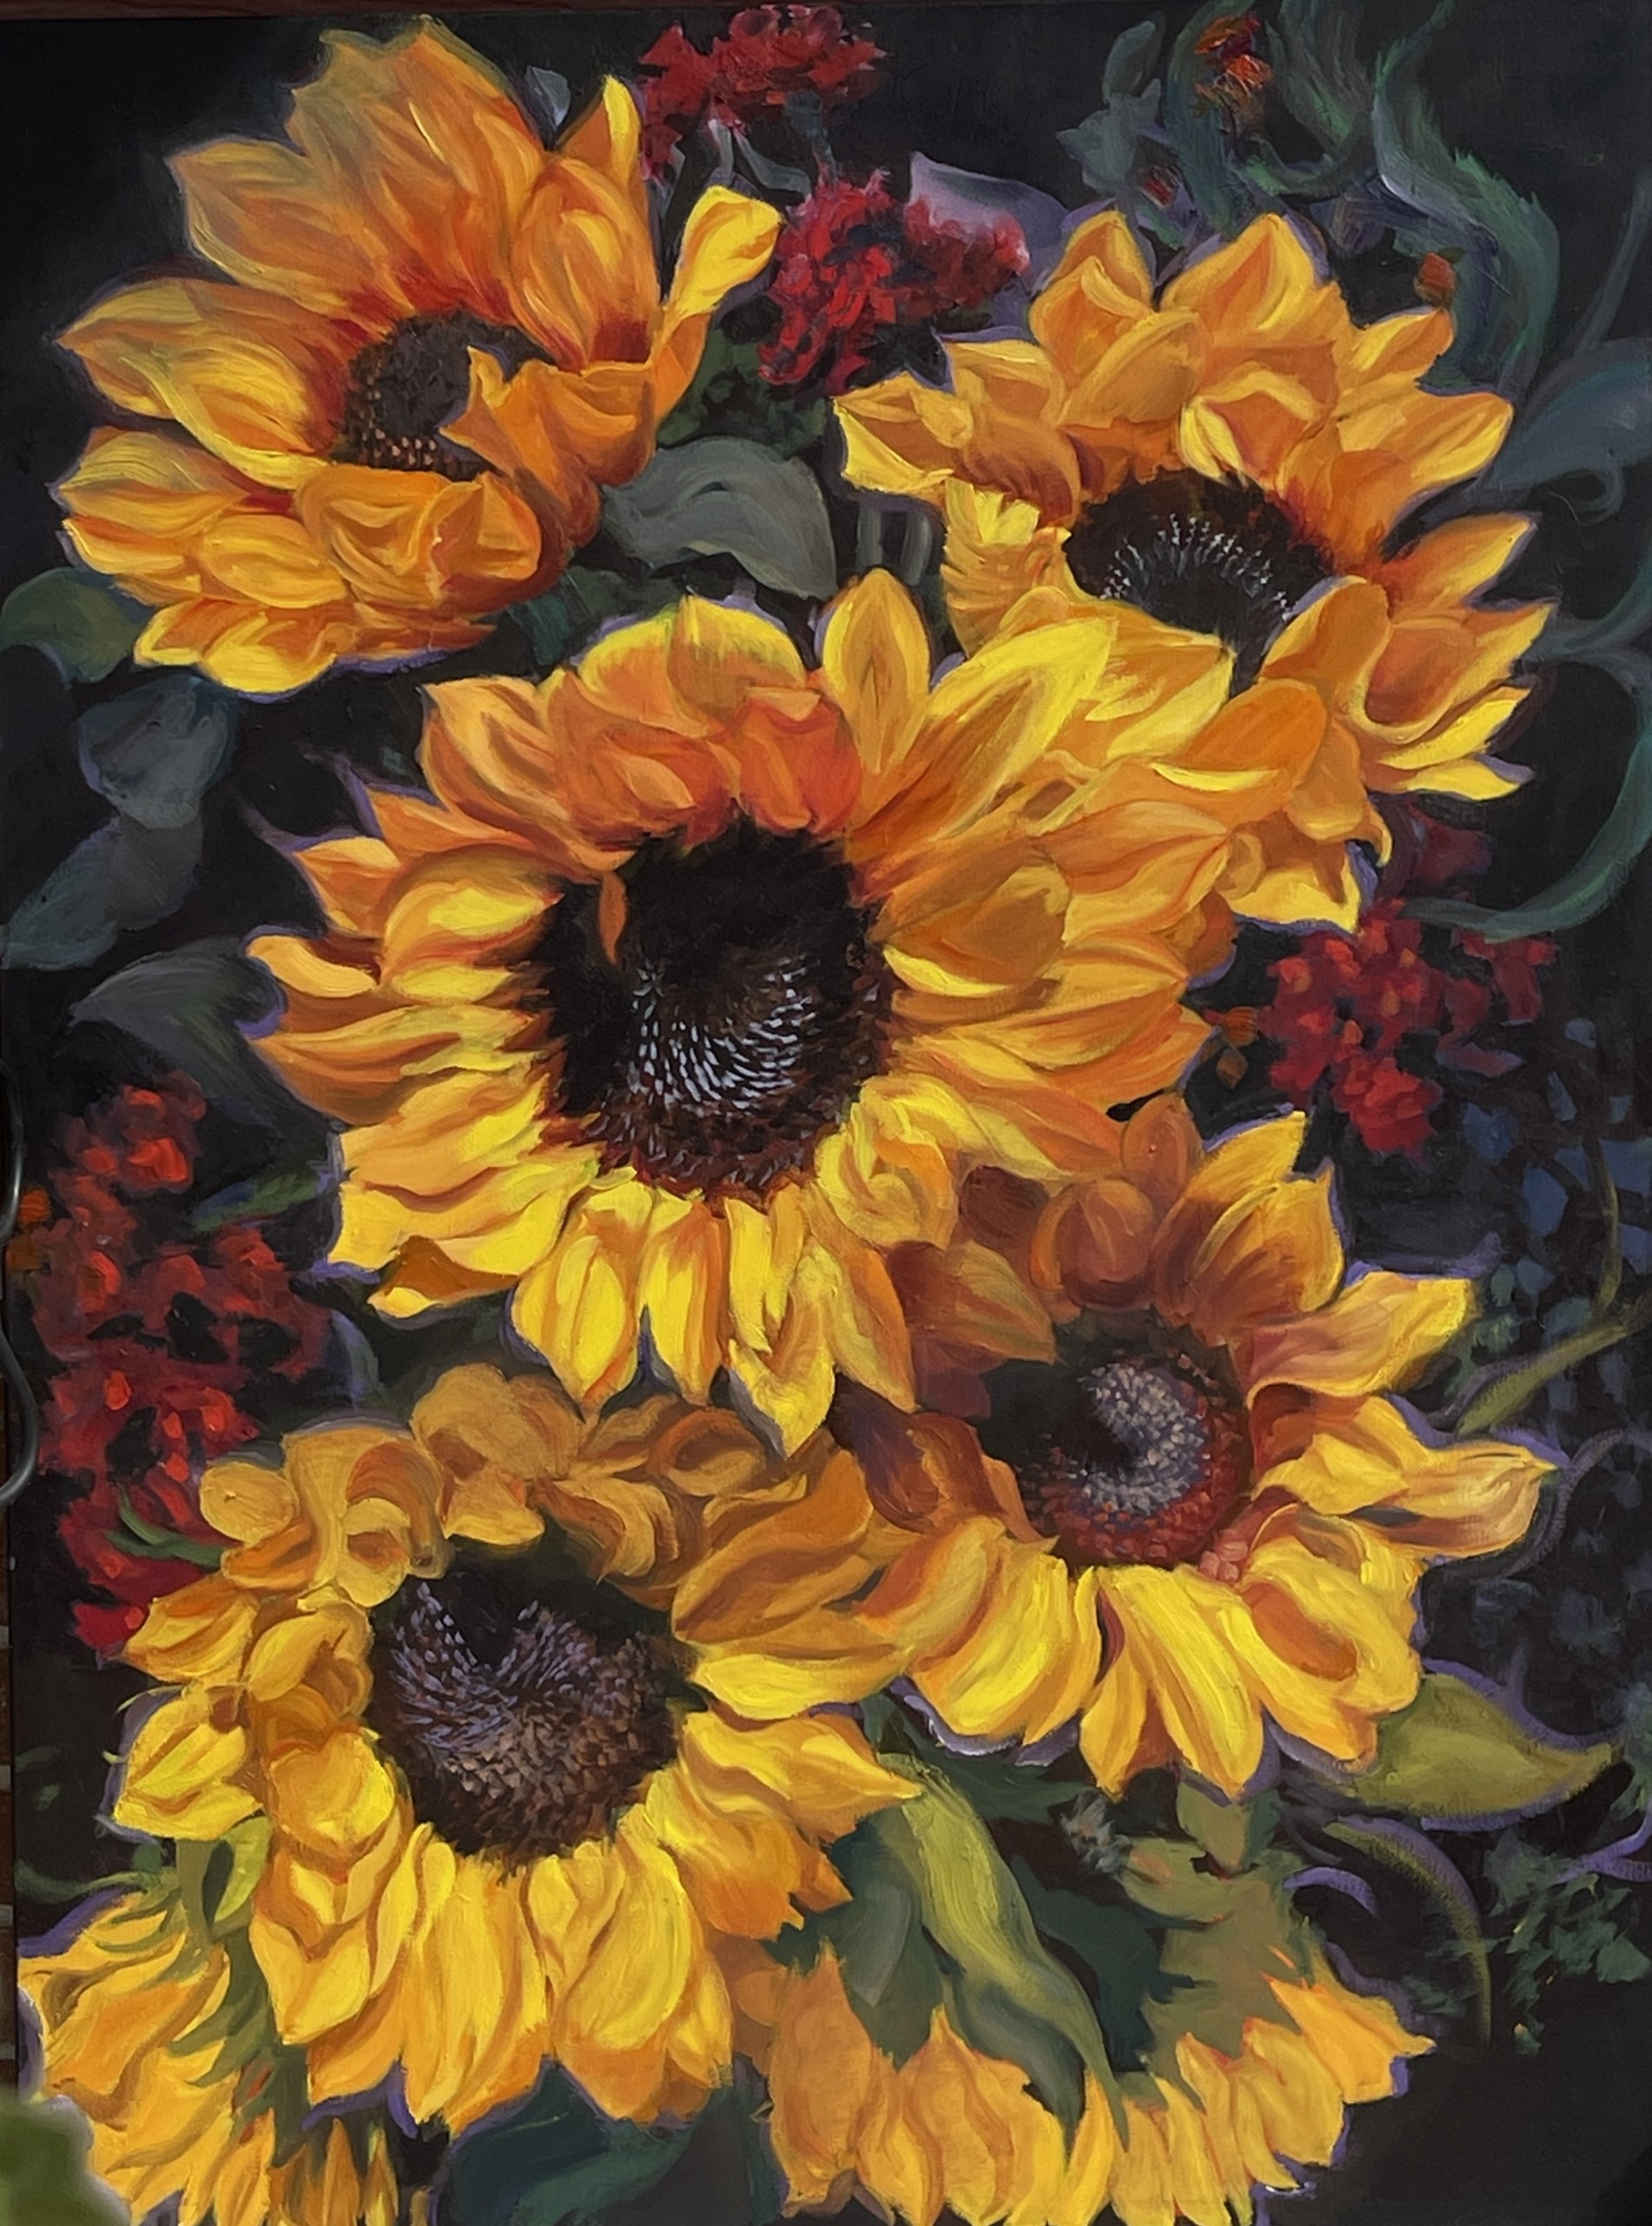 Mary Binford Miller, “Sun Beauties”, oil on canvas